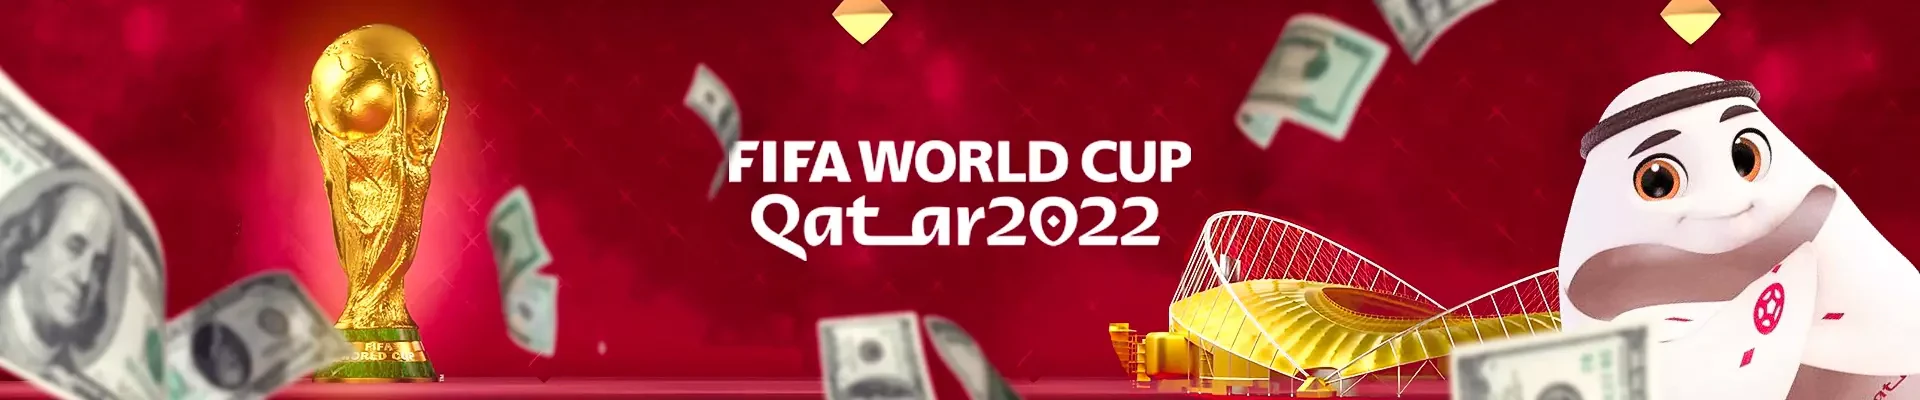 header coupe du monde 2022